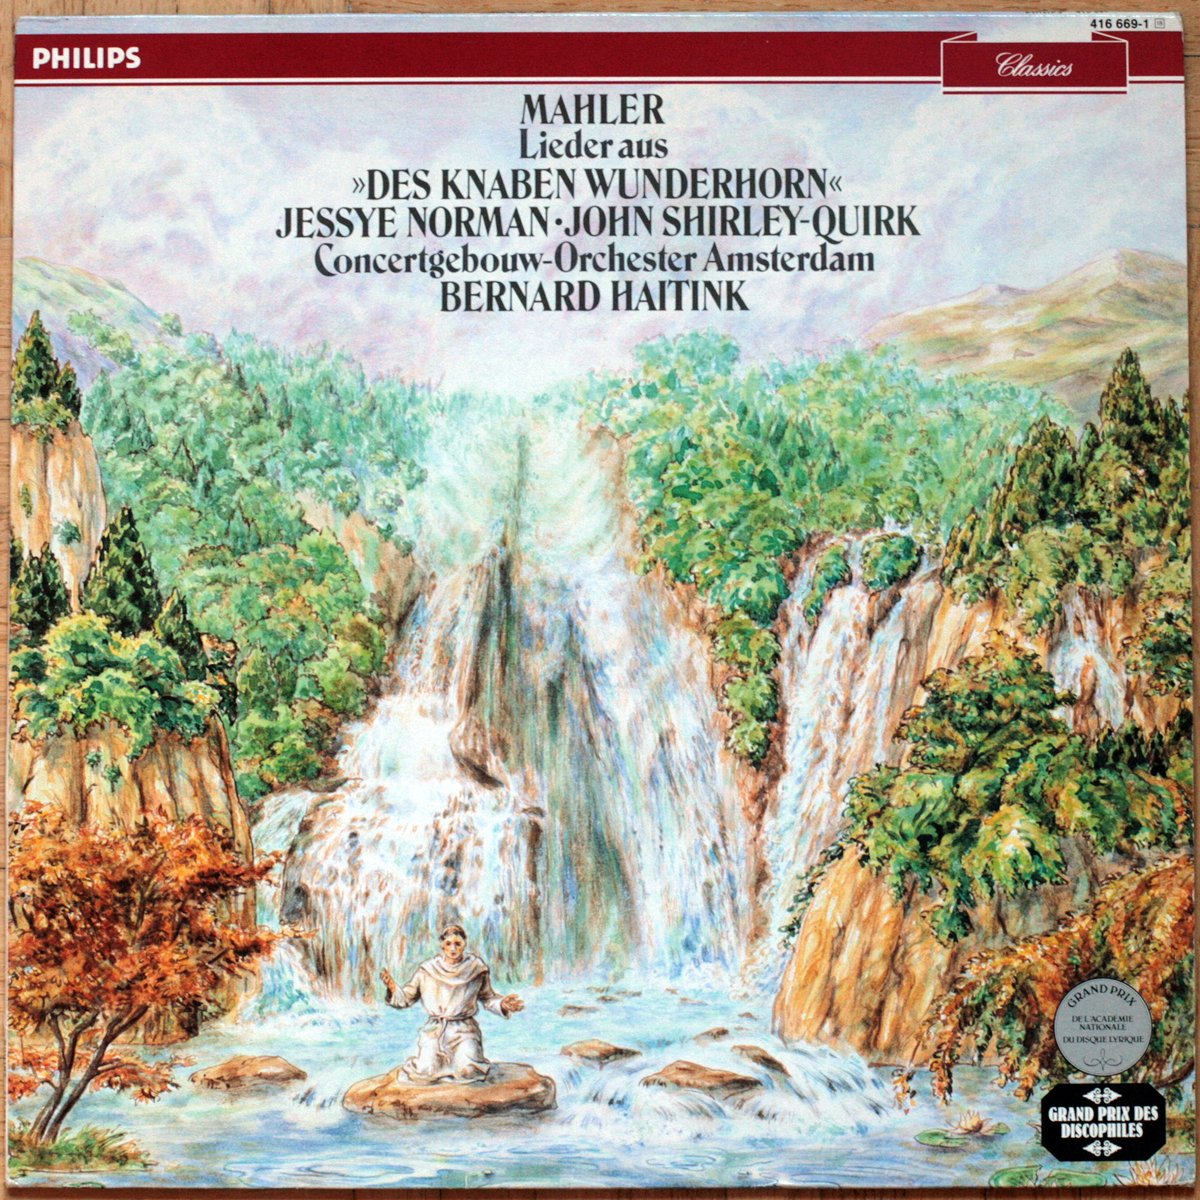 Mahler • Des Knaben Wunderhorn • Philips 416 669-1 • Jessye Norman • John Shirley-Quirk • Concertgebouw-Orchester Amsterdam • Bernard Haitink